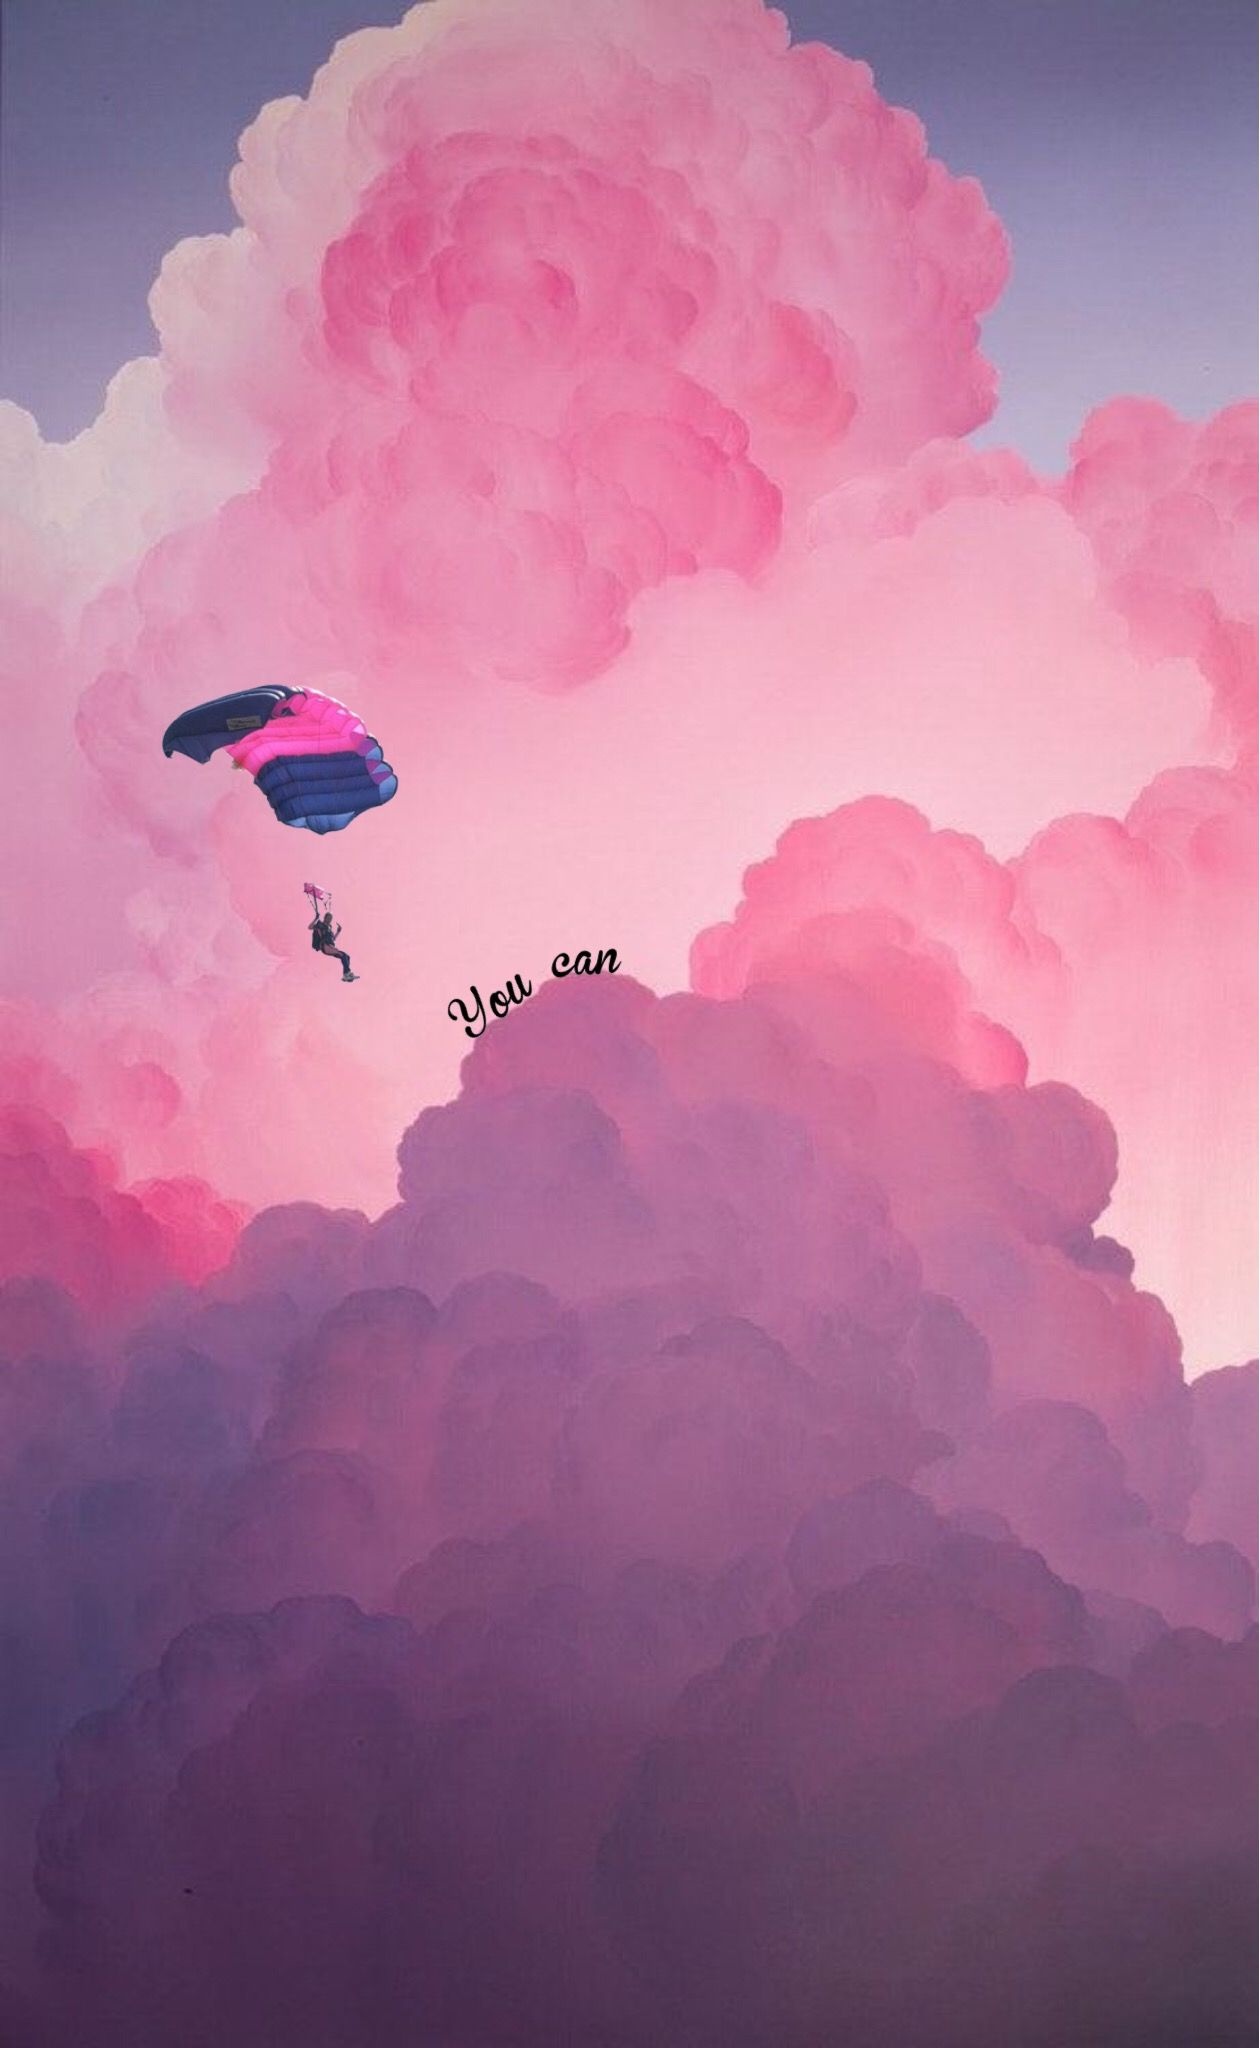 Parachuting: Skydiving monochrome pink art, Extreme sport motivation. 1260x2050 HD Wallpaper.